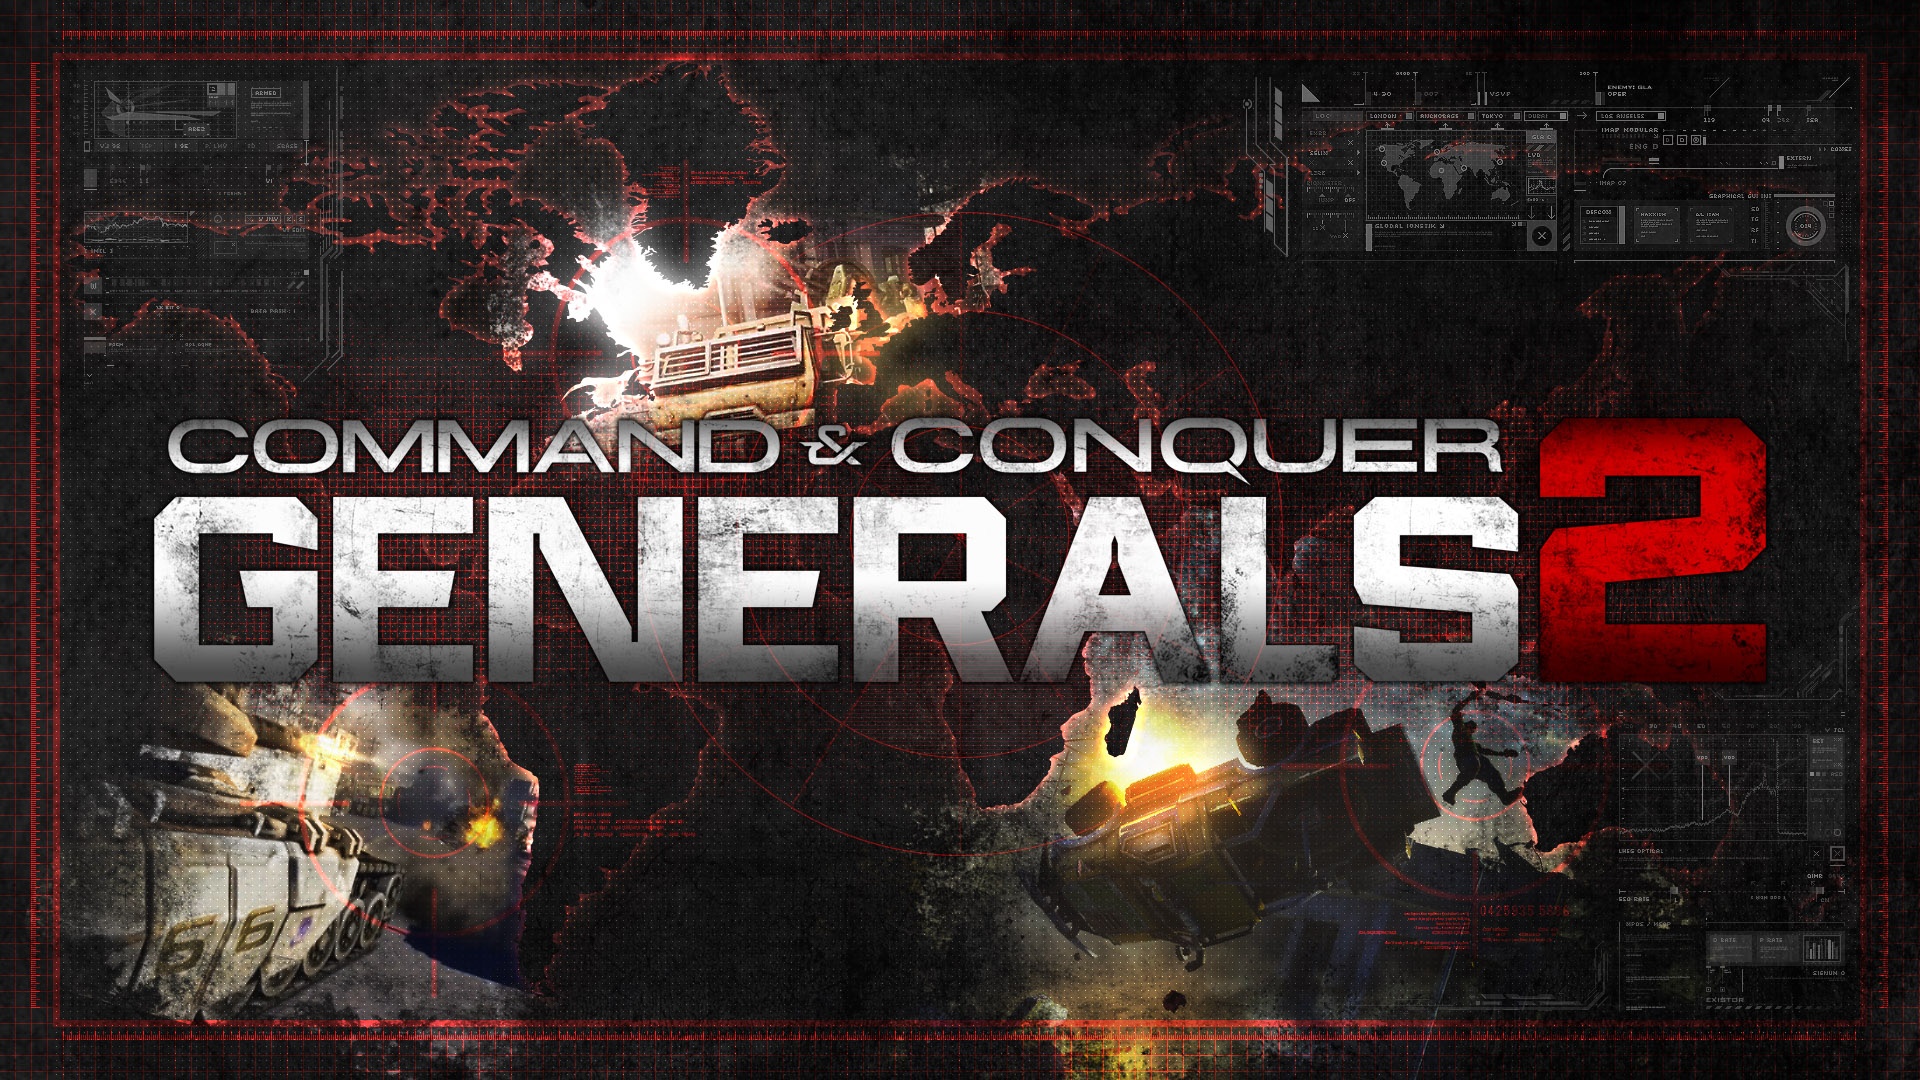 Mand Conquer Generals HD Wallpaper Background Image